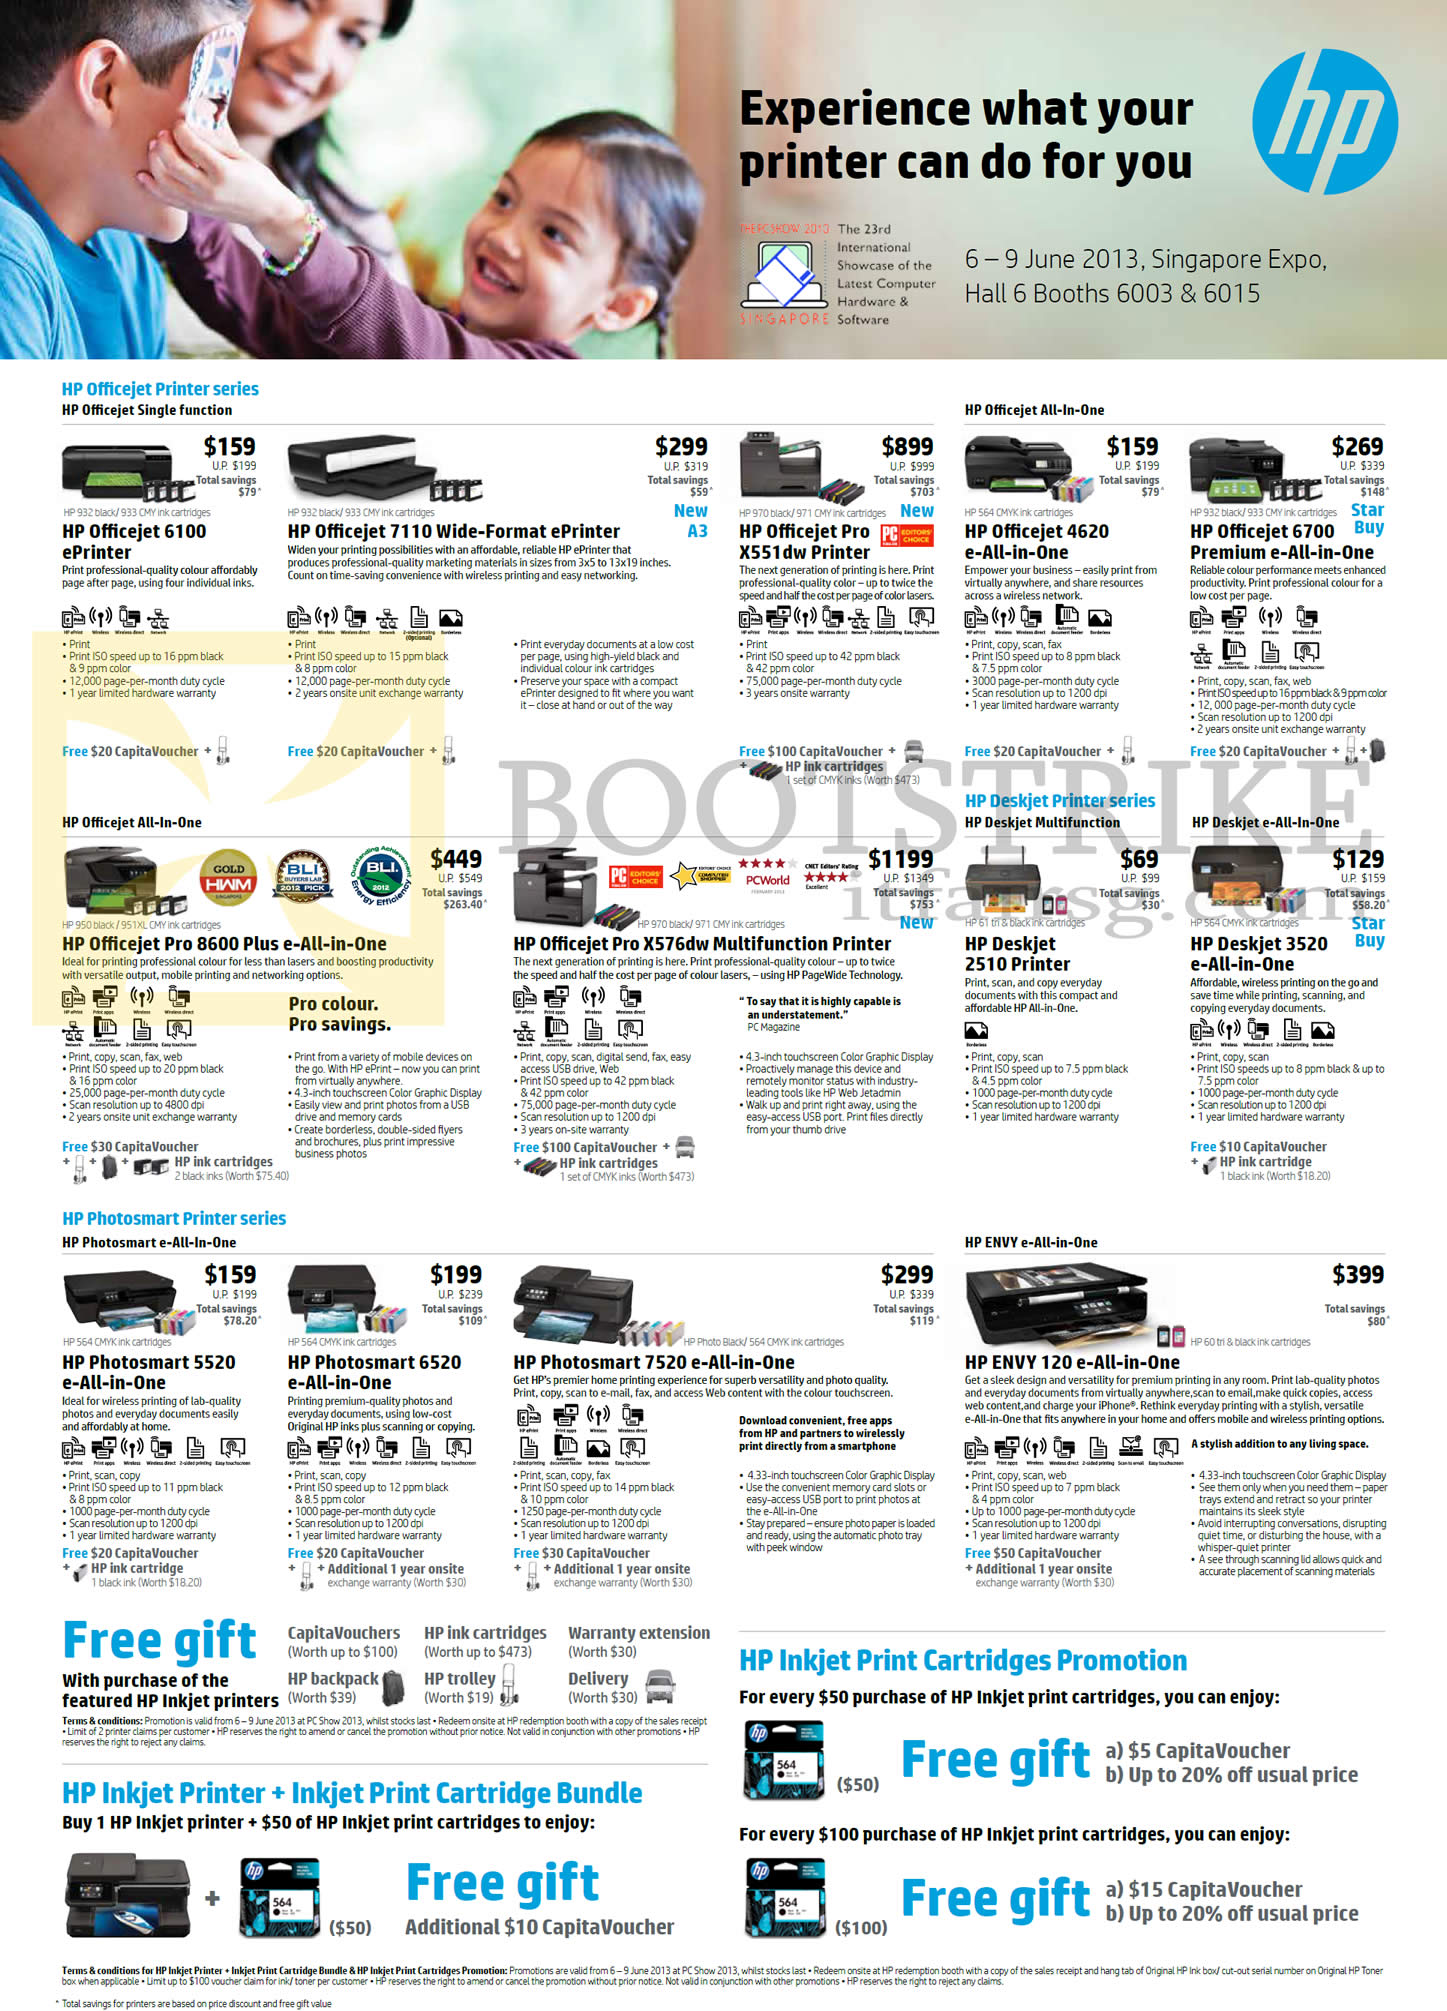 PC SHOW 2013 price list image brochure of HP Printers Inkjet Officejet 6100, 7110, X551dw, 4620, 6700, 8600, X576dw, Deskjet 2510, 3520, Photosmart 5520, 6520, 7520, Envy 120